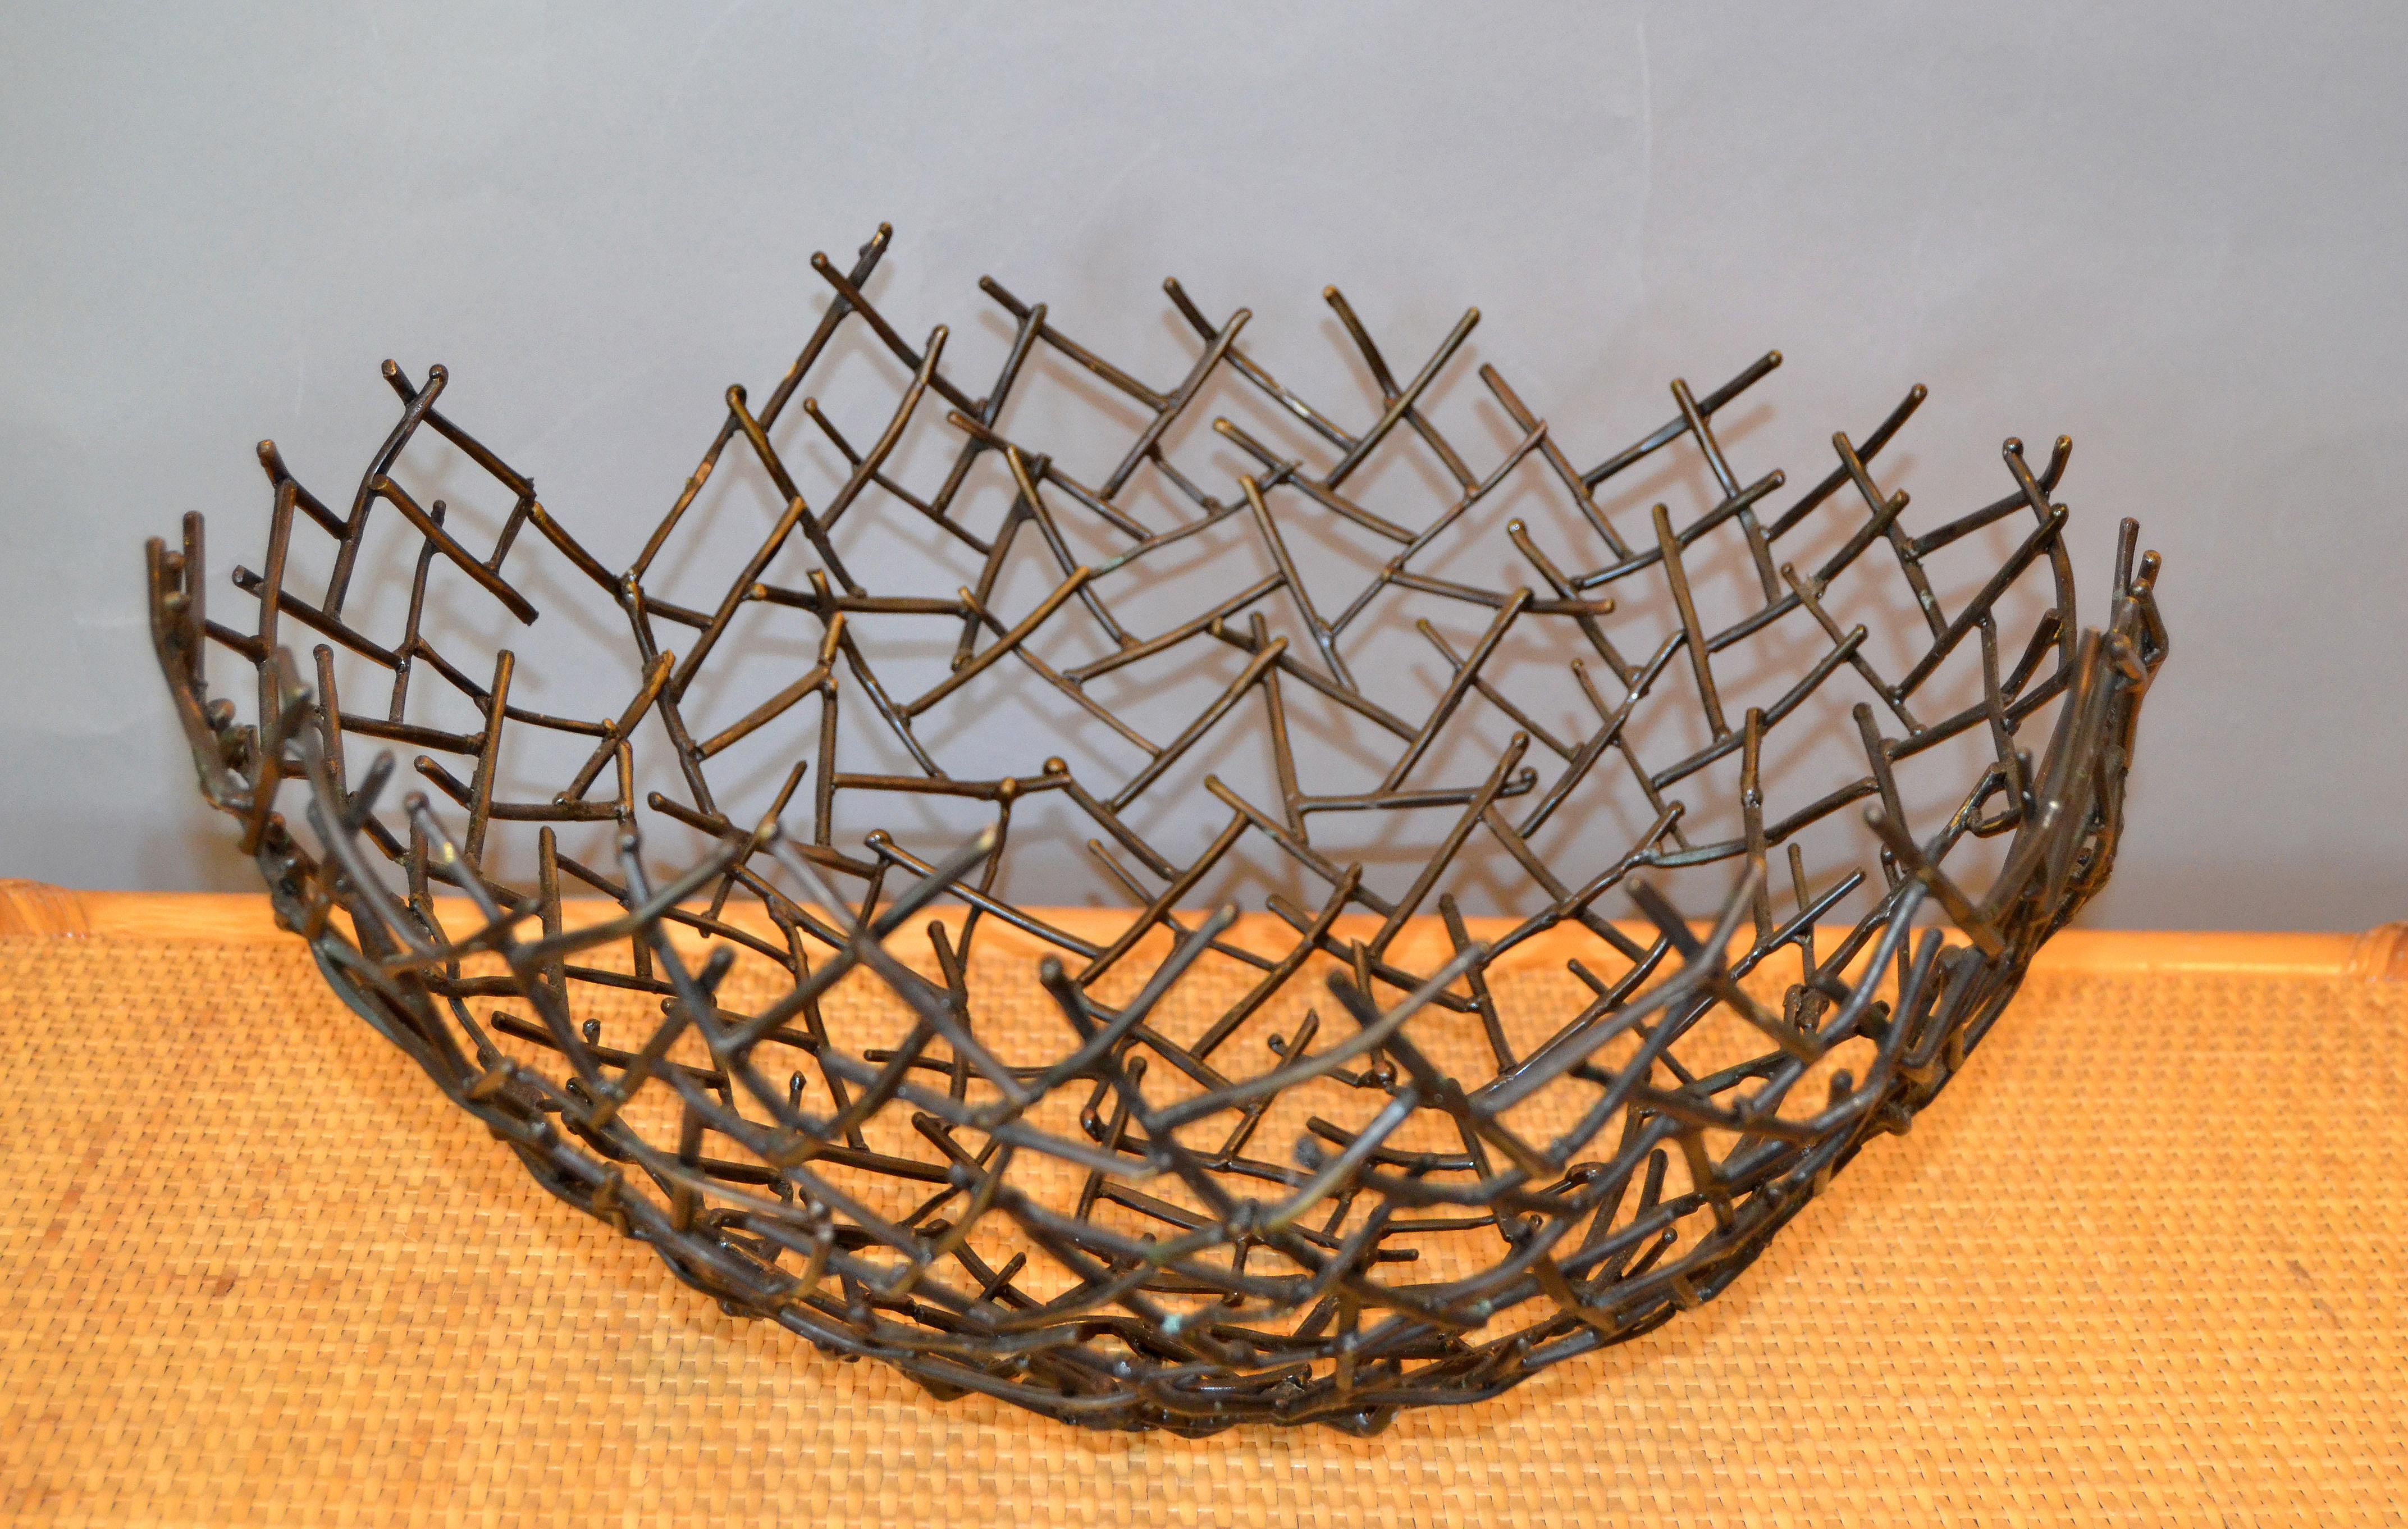 Modern Michael Aram Thatch bowl in bronze nest twig.
Makers mark underneath, Aram.
Great as a centerpiece.